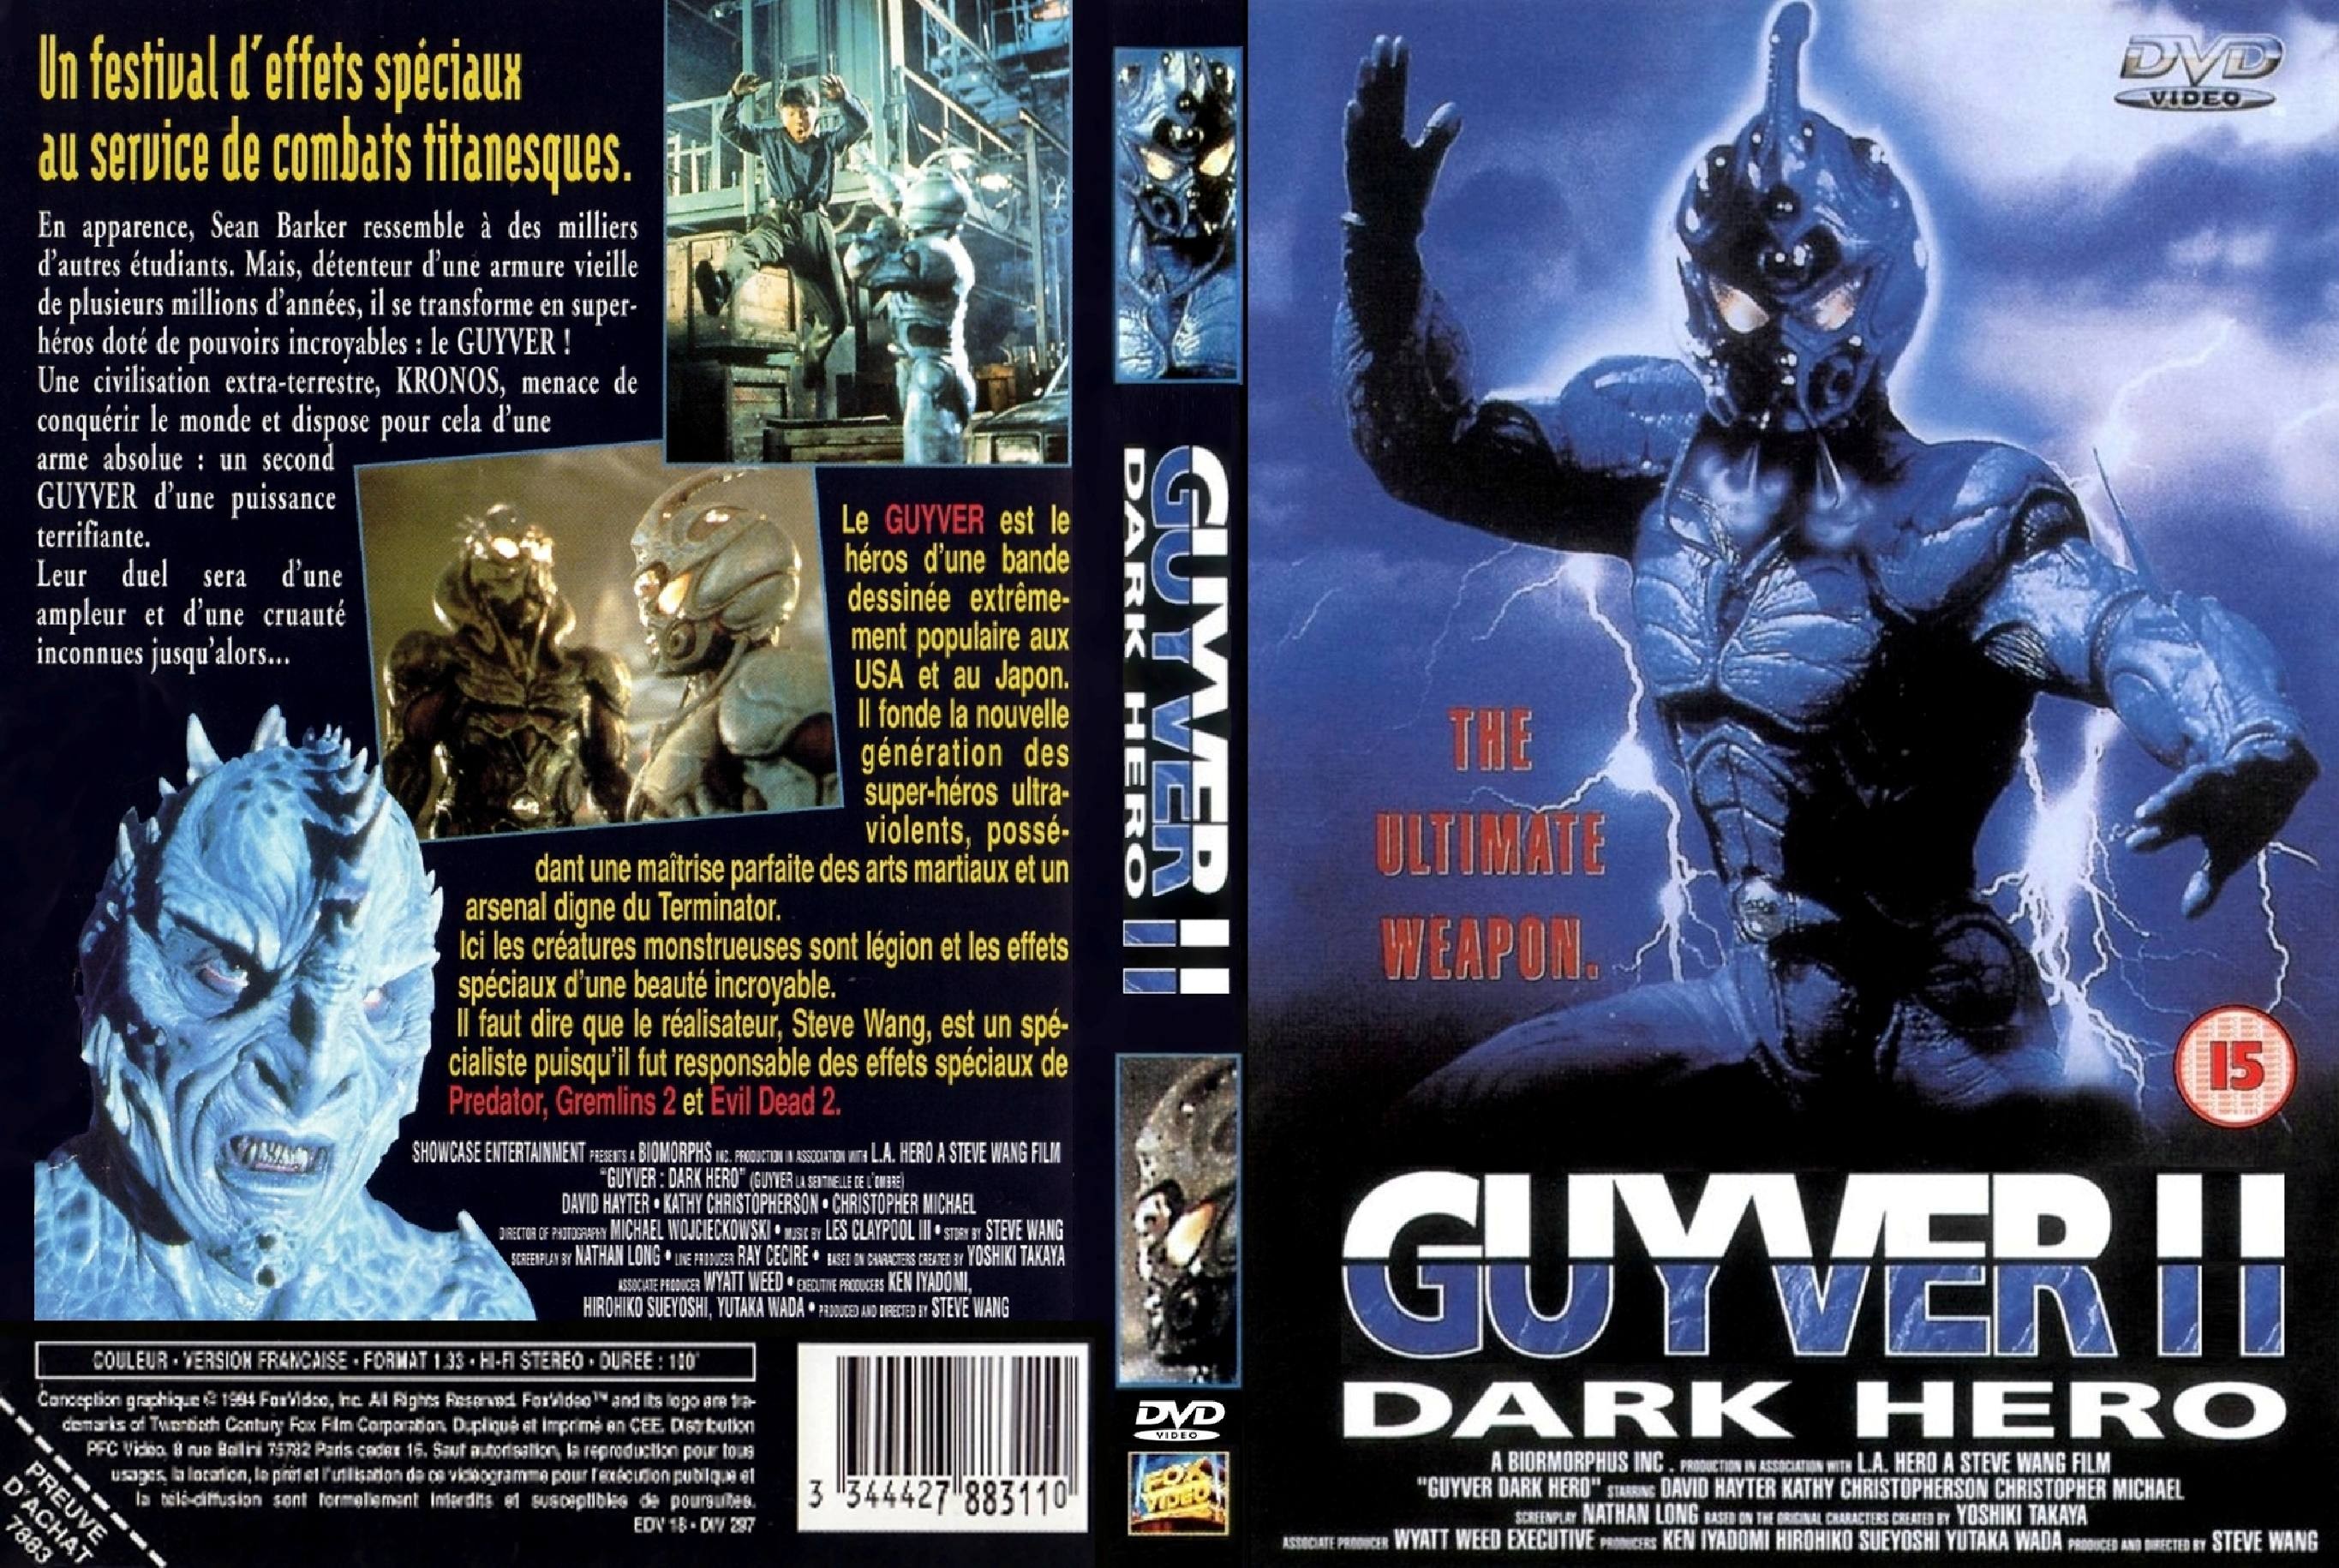 Jaquette DVD The guyver 2 Dark Hero custom